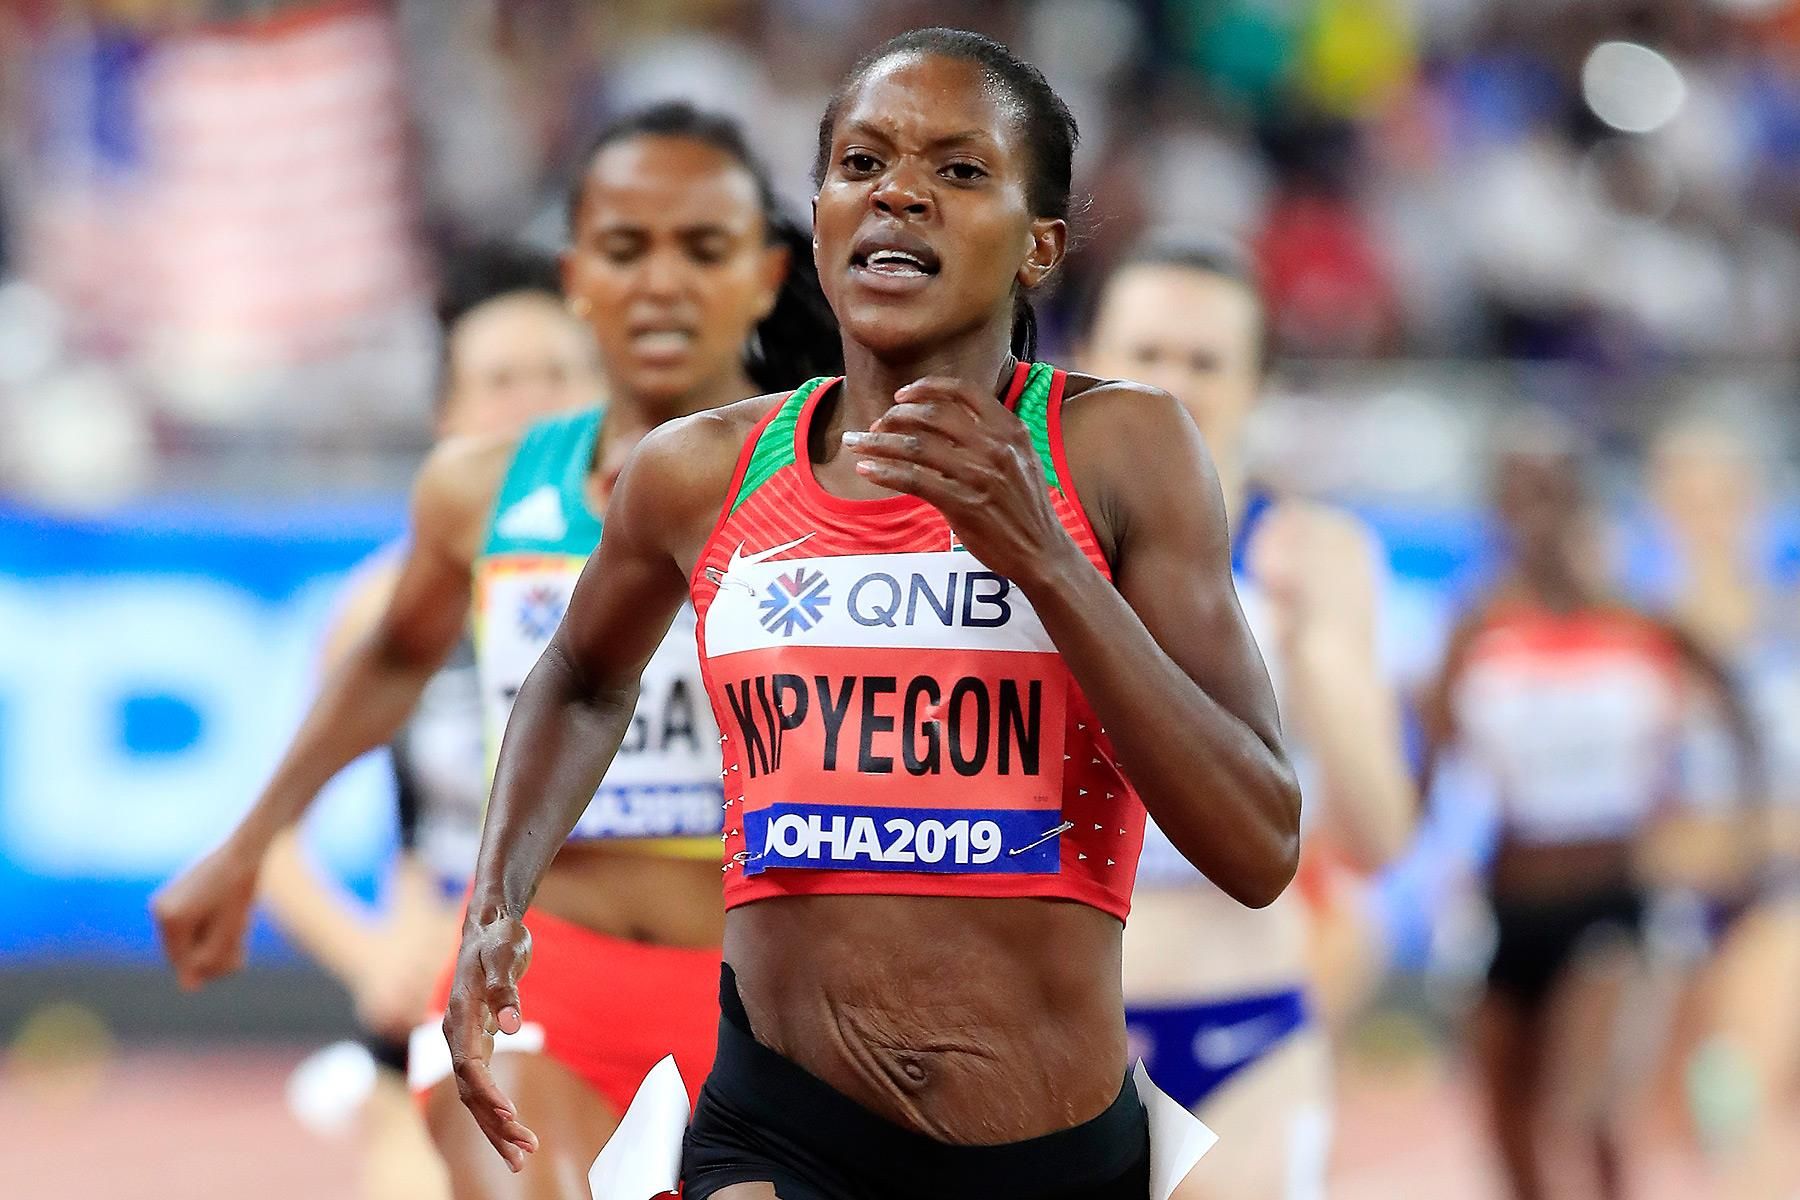 Faith Kipyegon at the 2019 World Athletics Championships in Doha